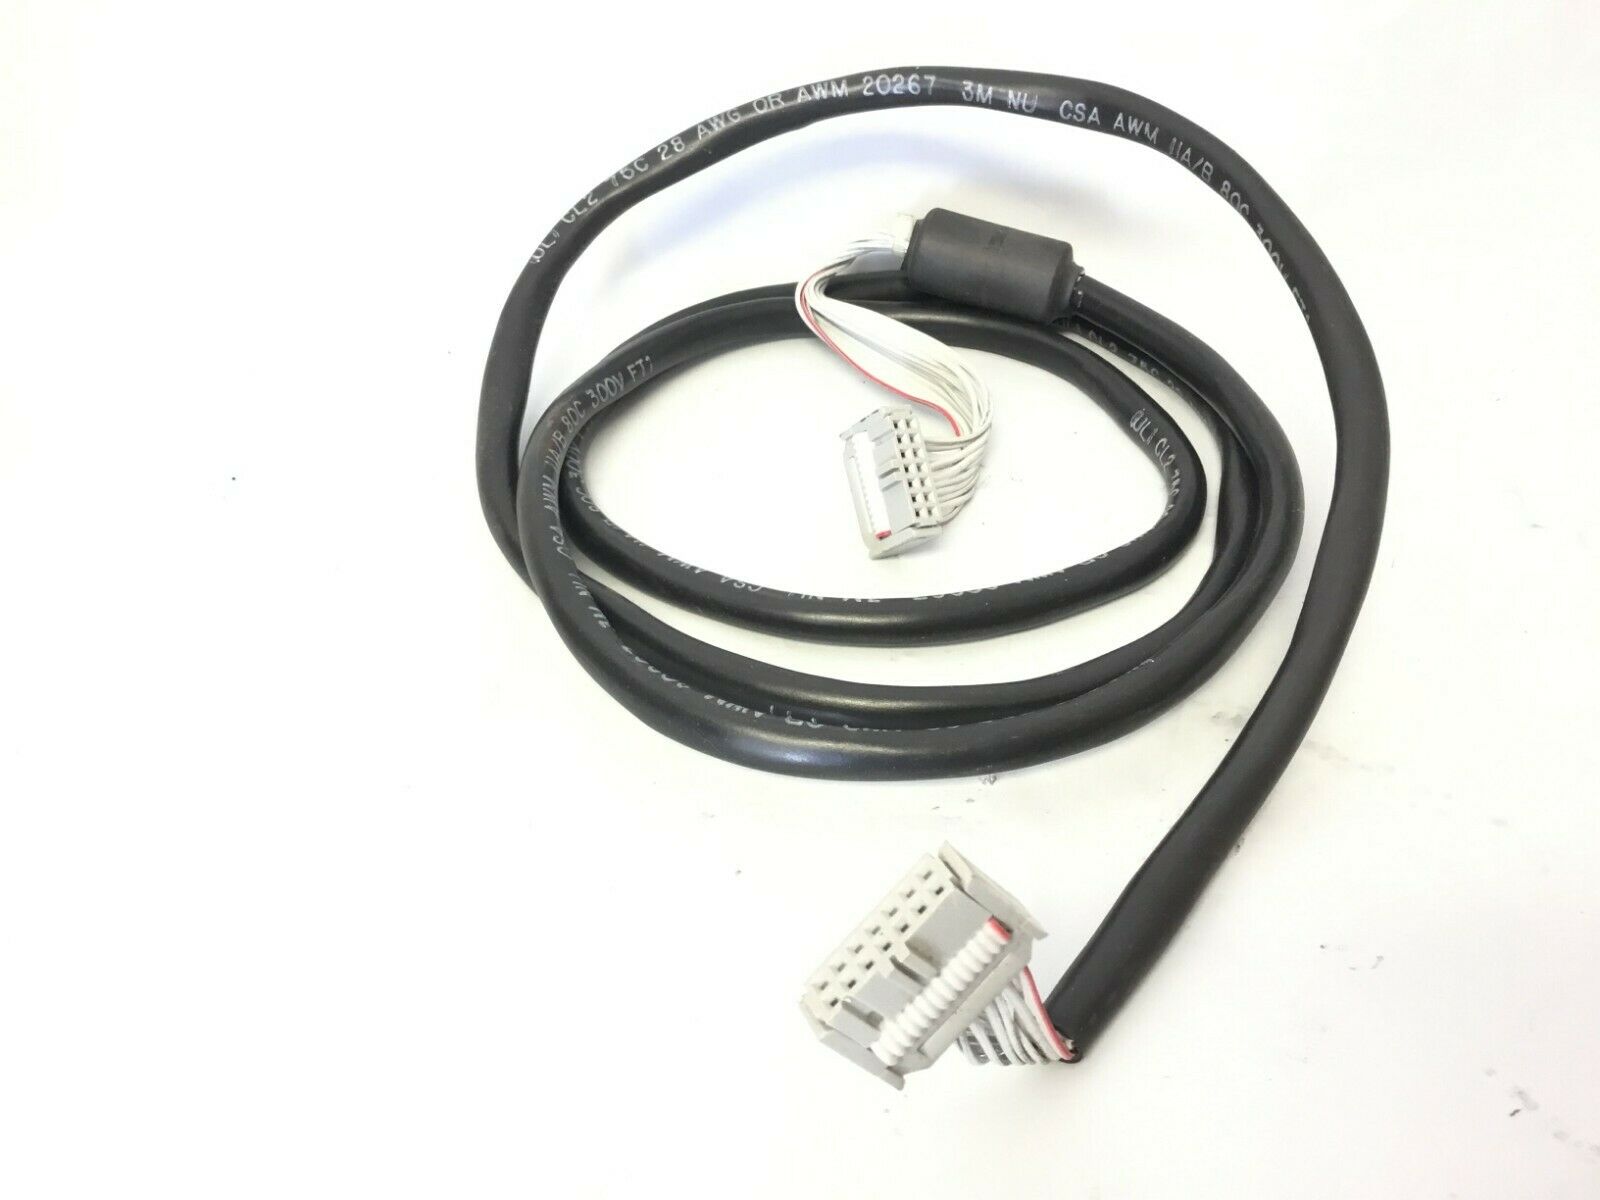 Precor M9.2x 9.2x 9.21si (2Y) Treadmill Display Data Cable Wire Harness 11907708 (Used)